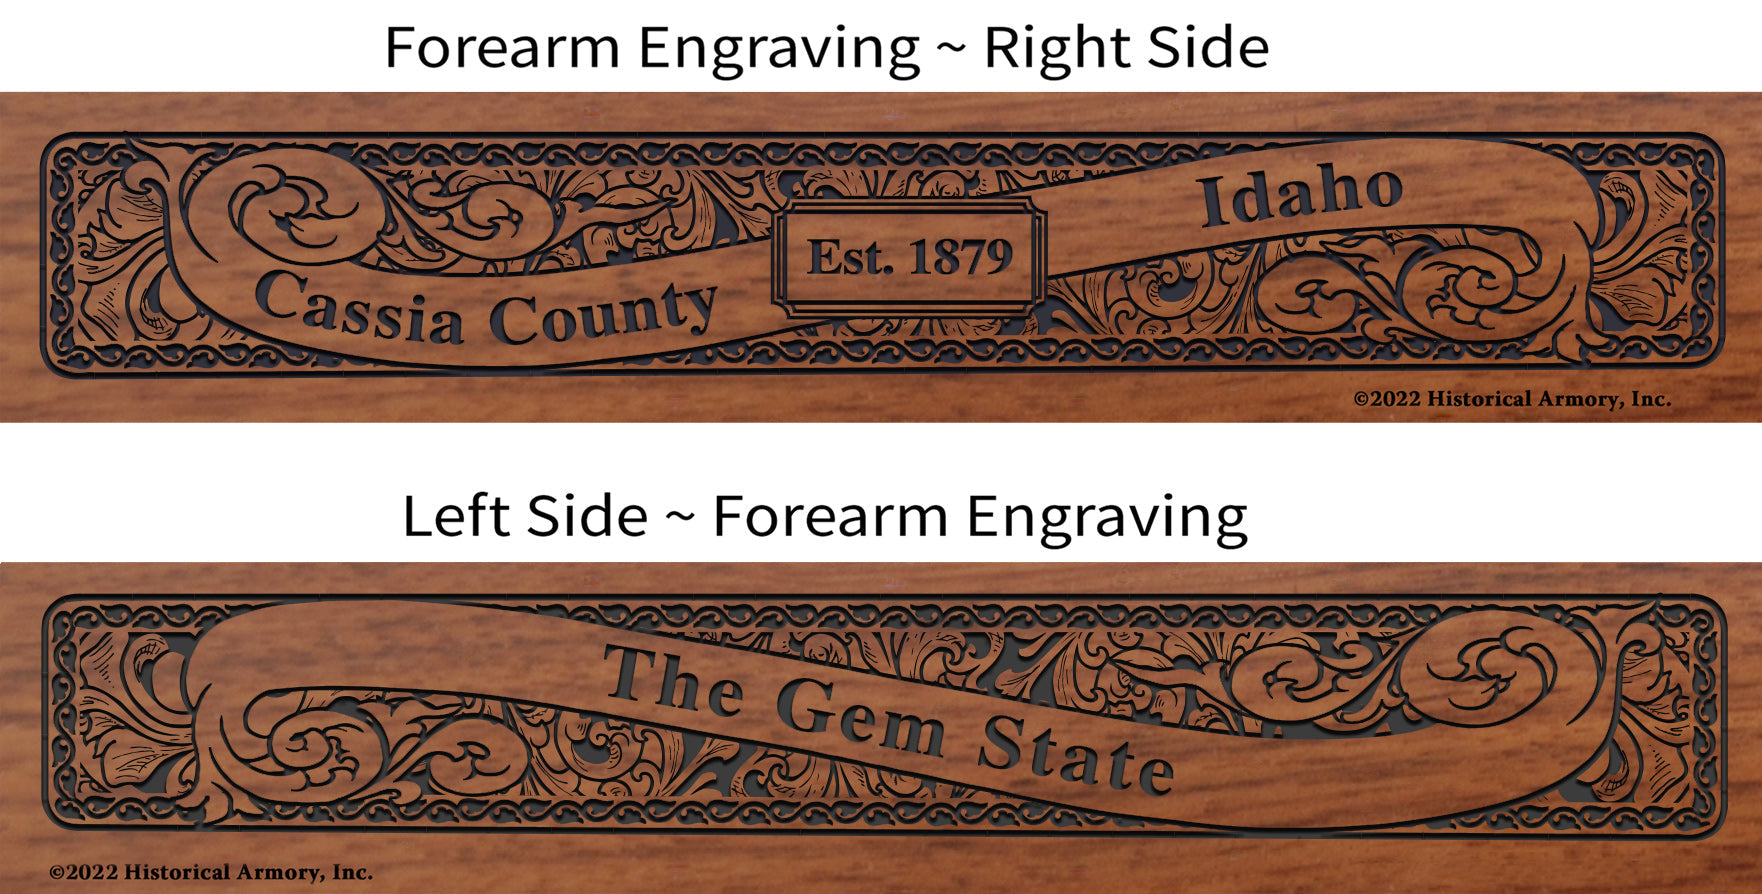 Cassia County Idaho Engraved Rifle Forearm